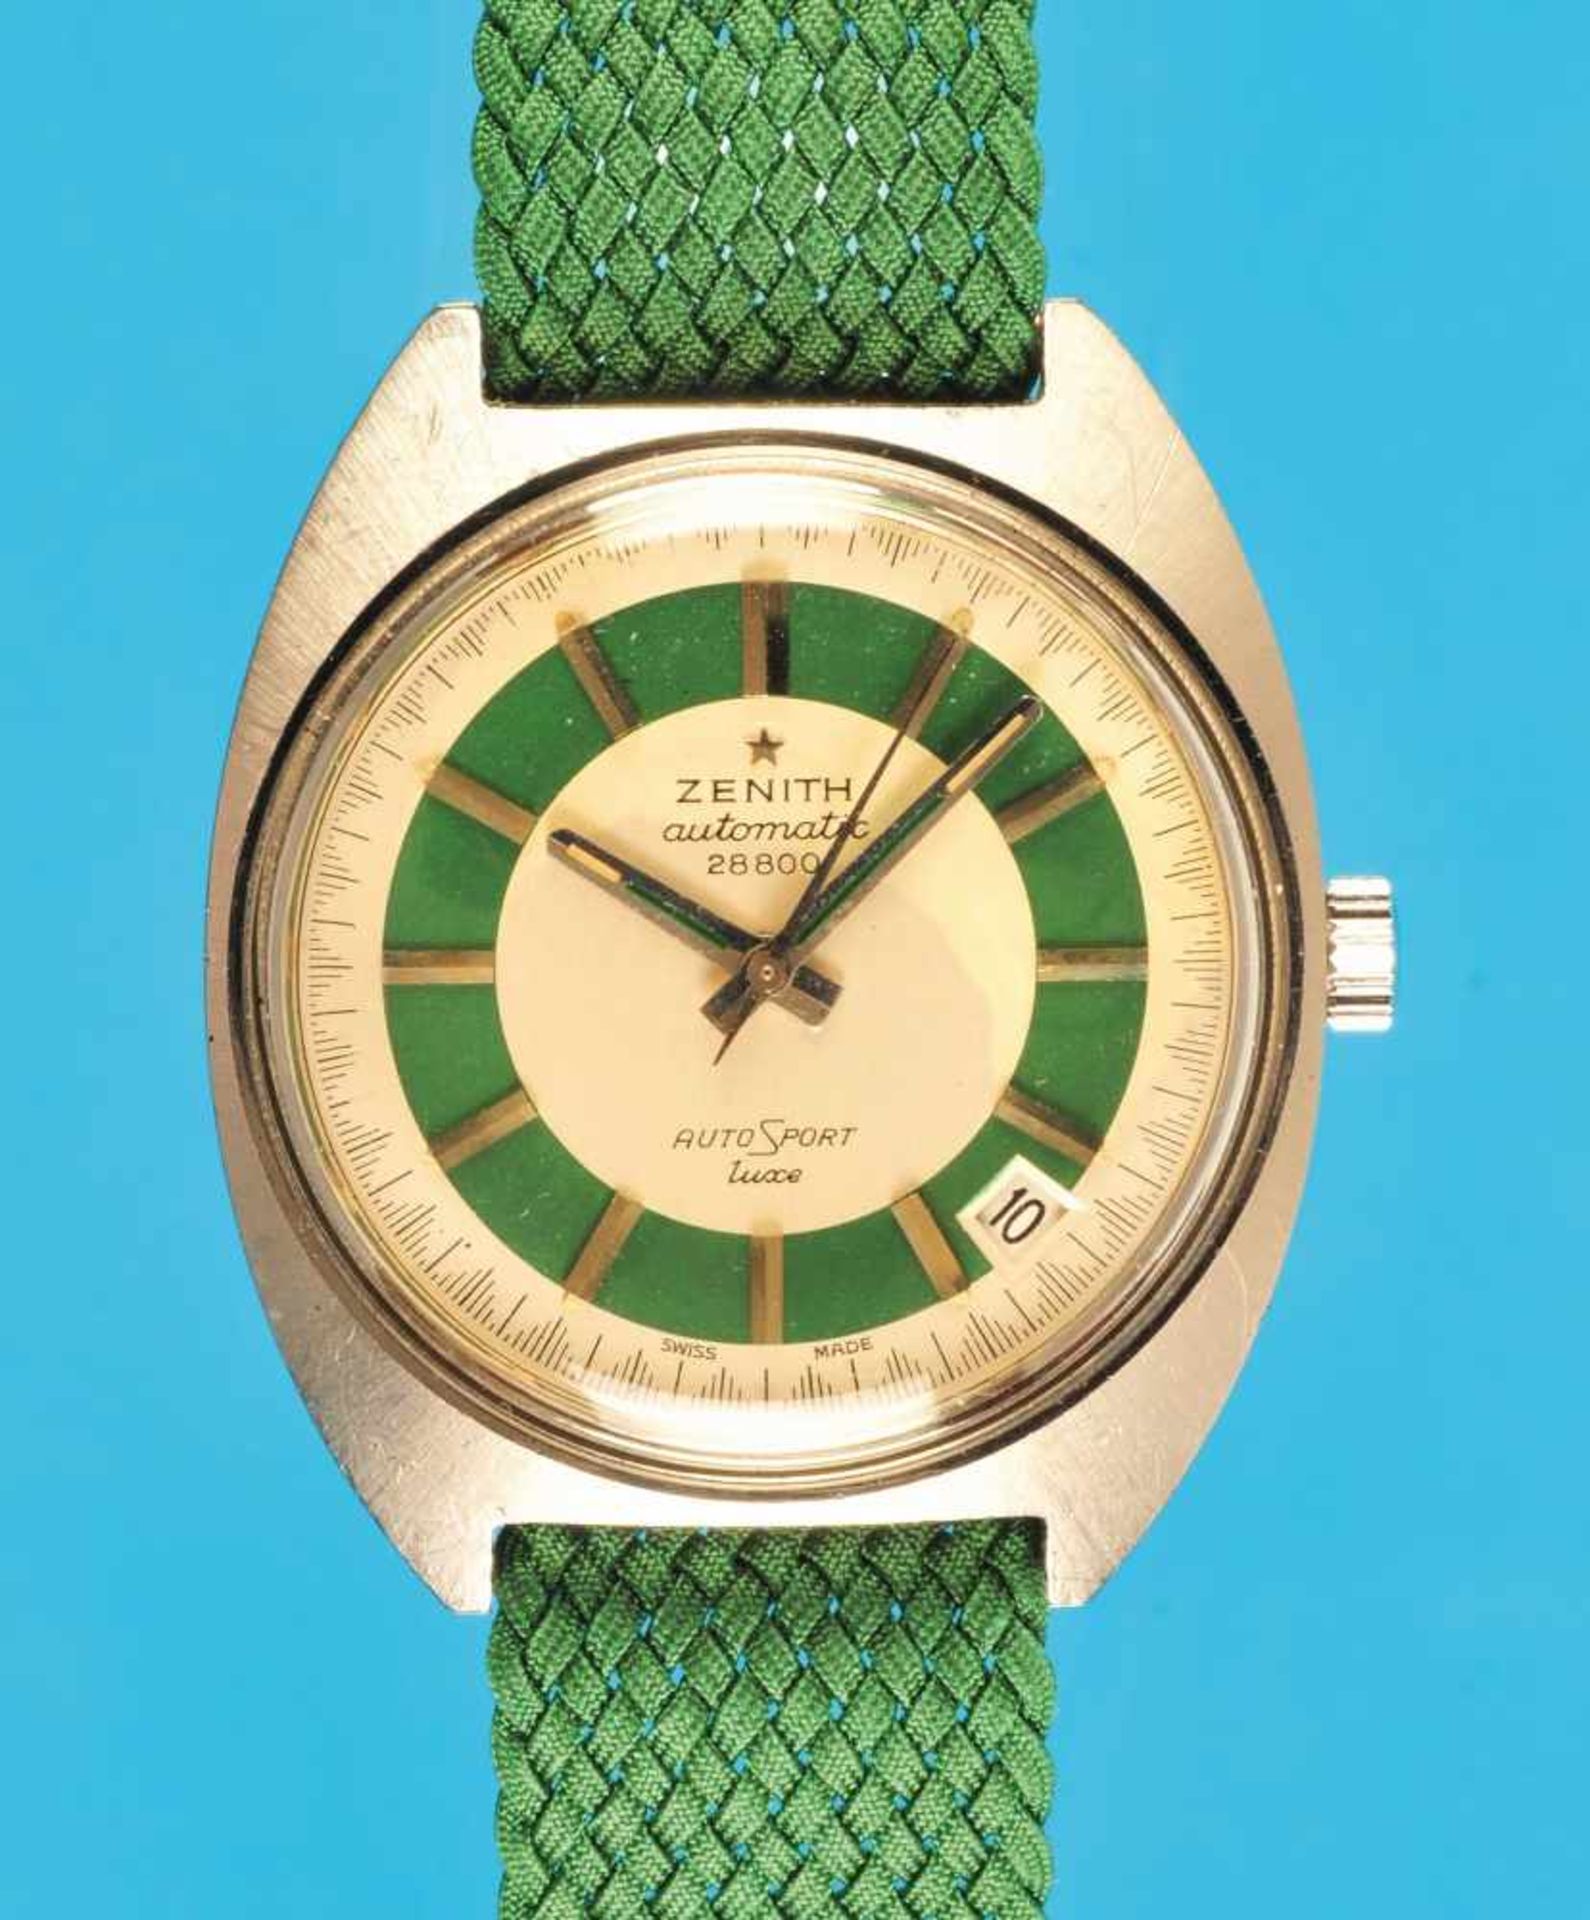 Steel wristwatch chronograph Zenith Automatic, 28800 Auto-SportStahlarmbanduhr- Chronograph, Zenith,